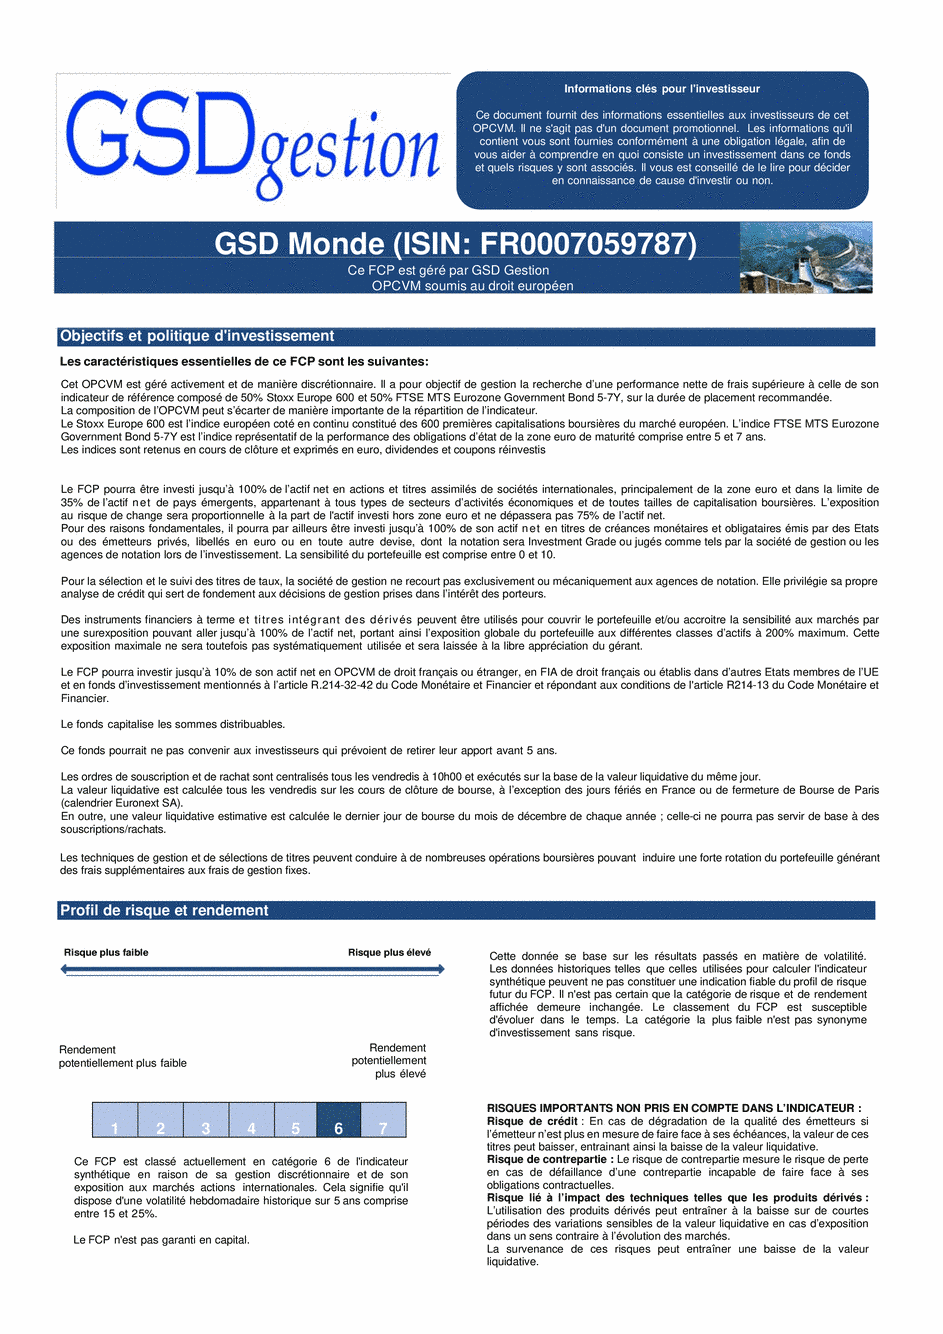 DICI-Prospectus GSD Monde - 12/01/2022 - Français